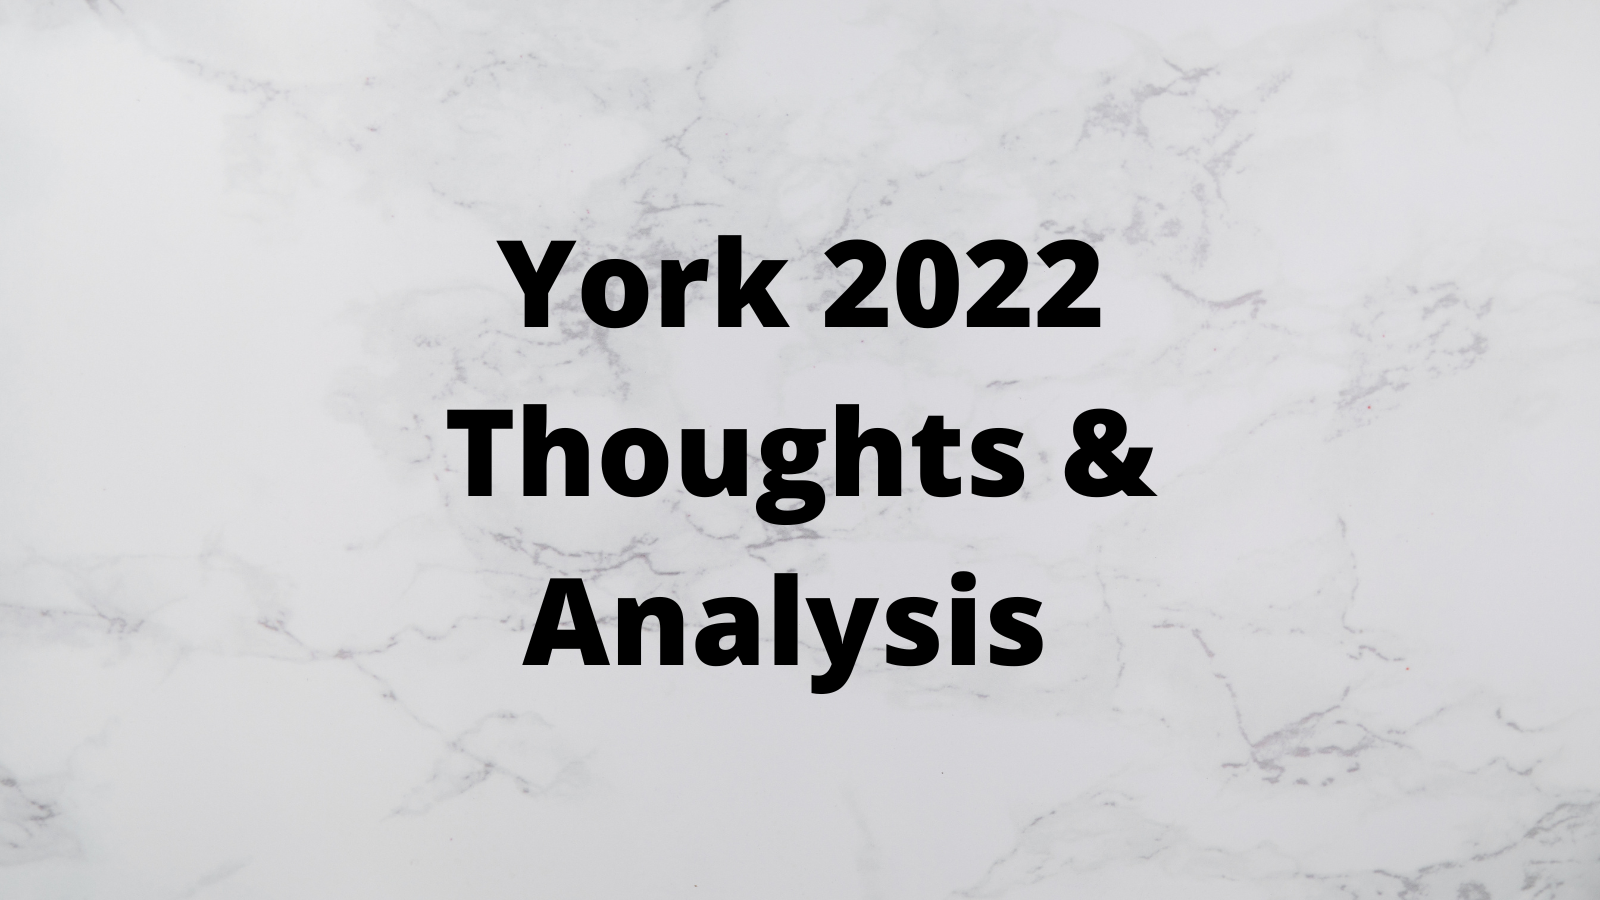 York 2022 Analysis